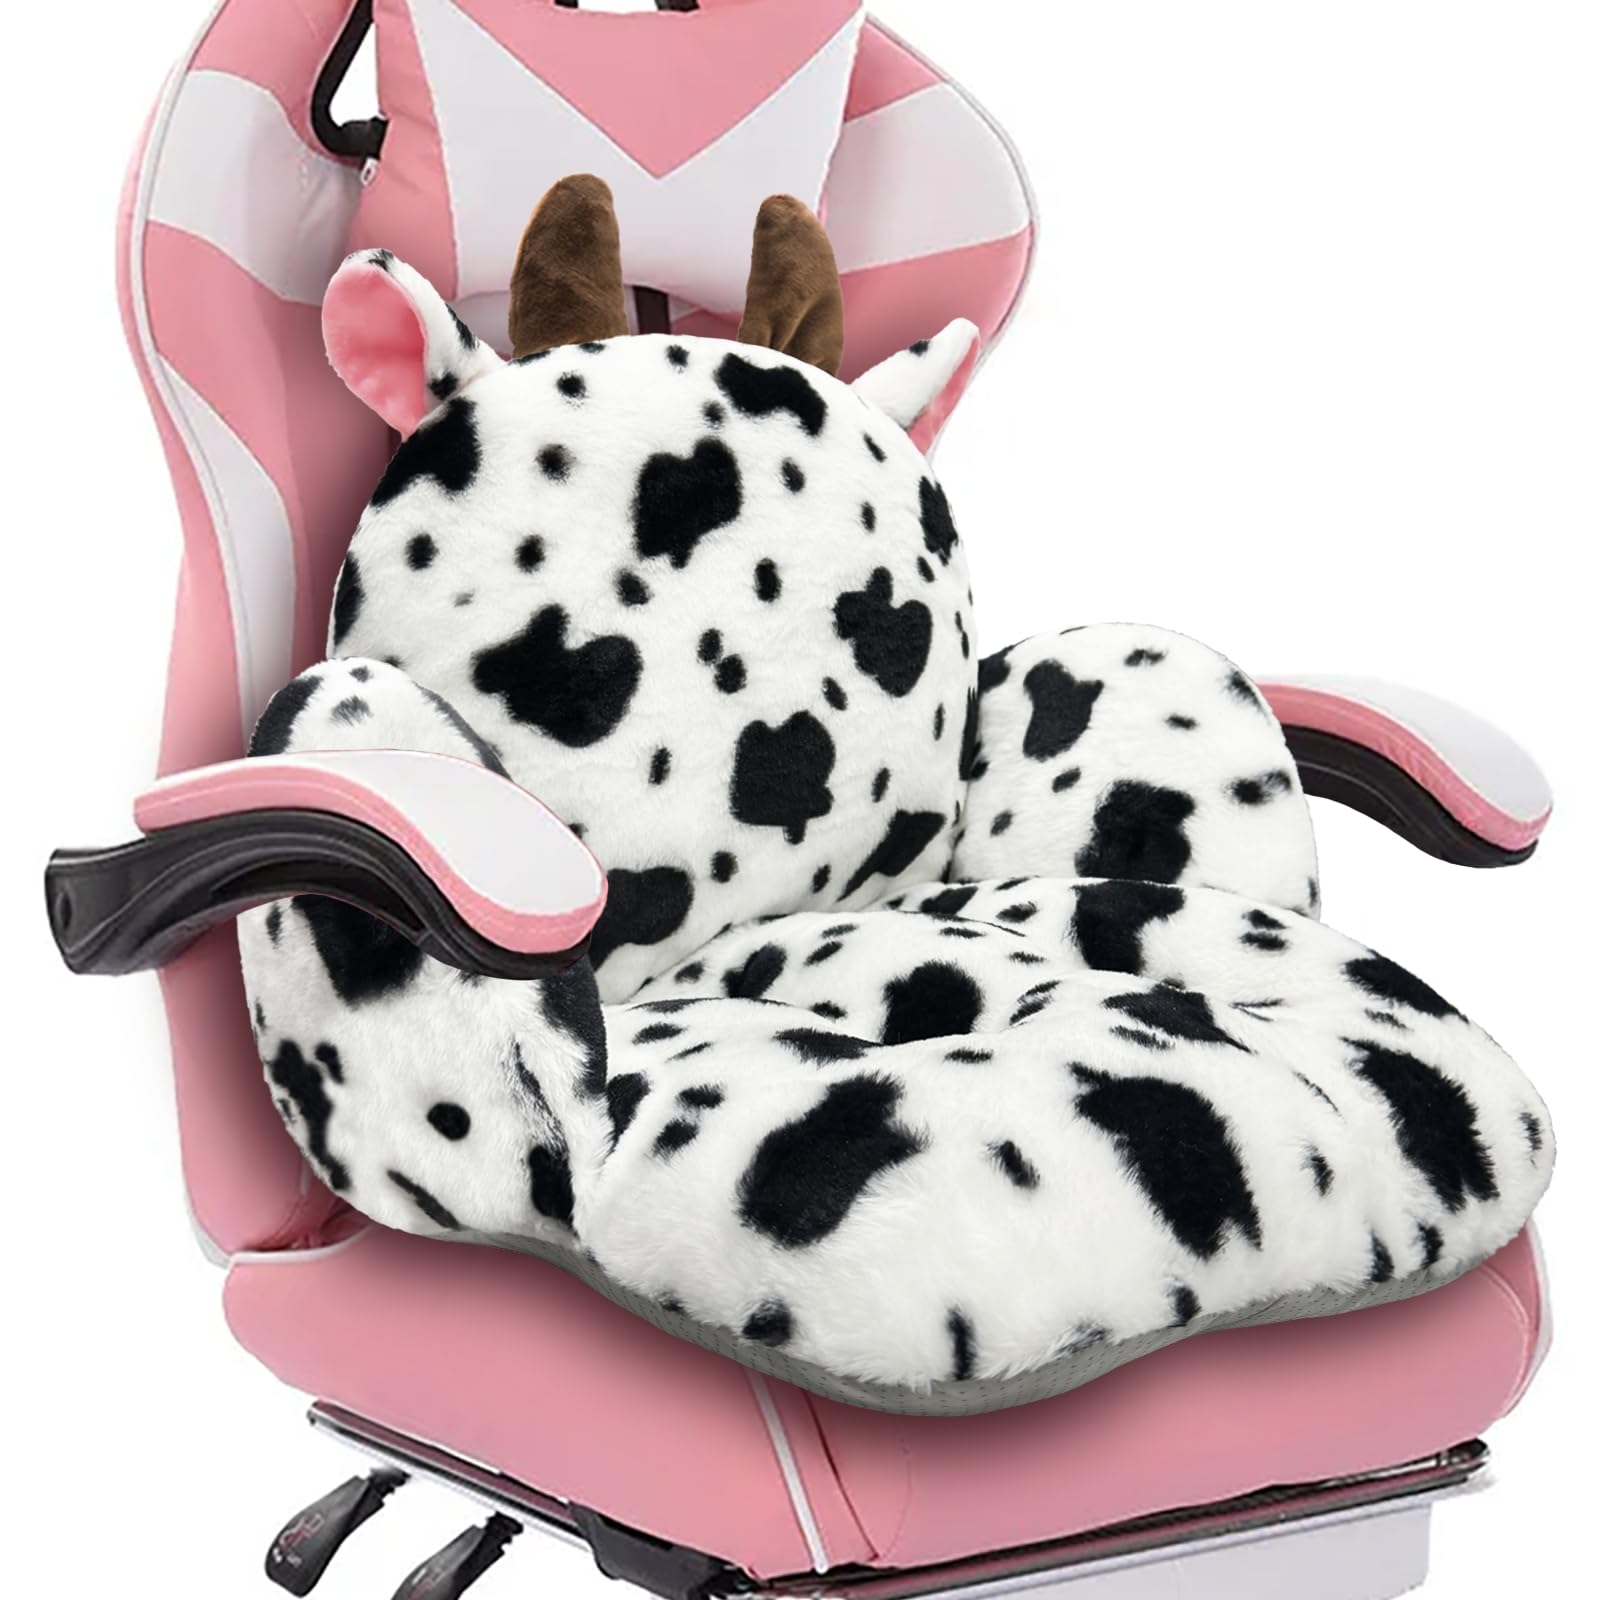 QIUODO Cute Chair Cushion, Gaming Chair Cushion with Backrest Non-Slip, Comfy Seat Cushion for Office Desk, Kawaii Chair Cushions for Gamer, Soft Chair Cushion for Room Bedroom Decor（Fancy Cow）